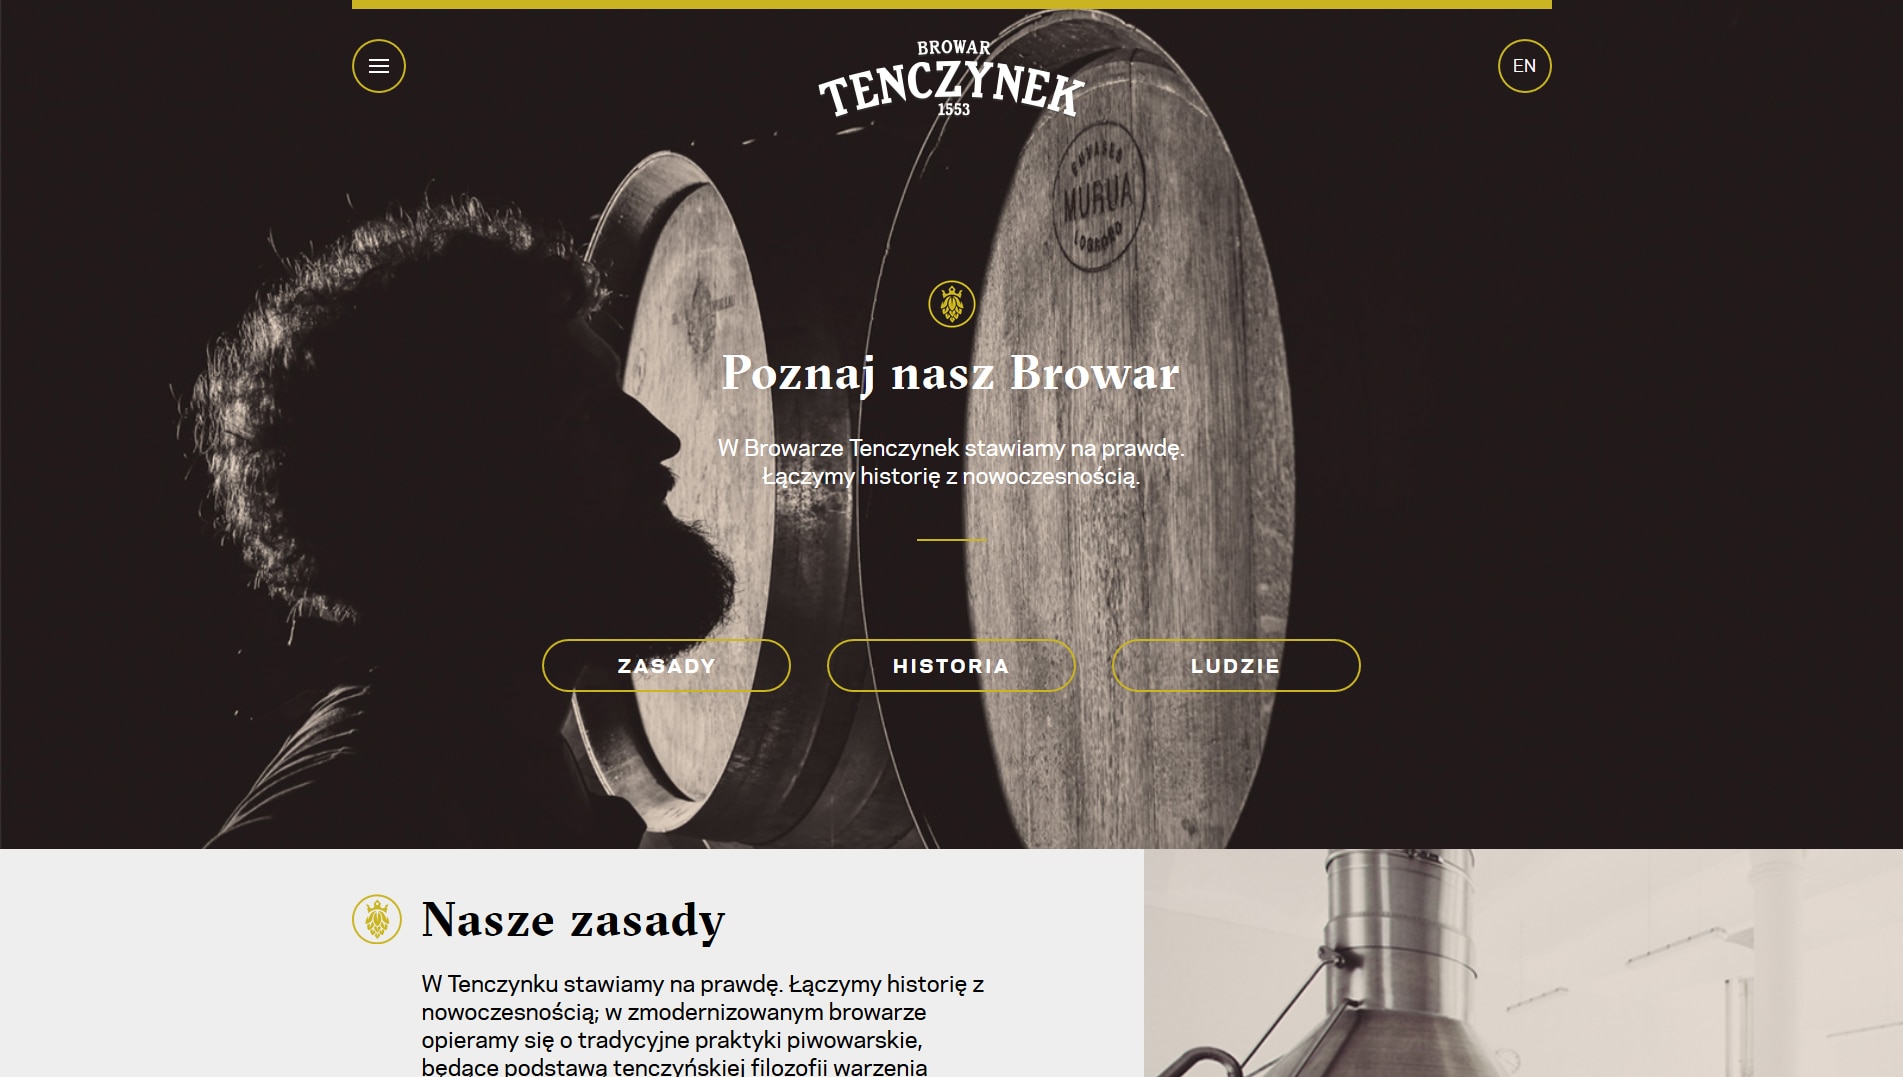 Tenczynek Brewery - Lesser Poland Regional Brewery Tenczynek